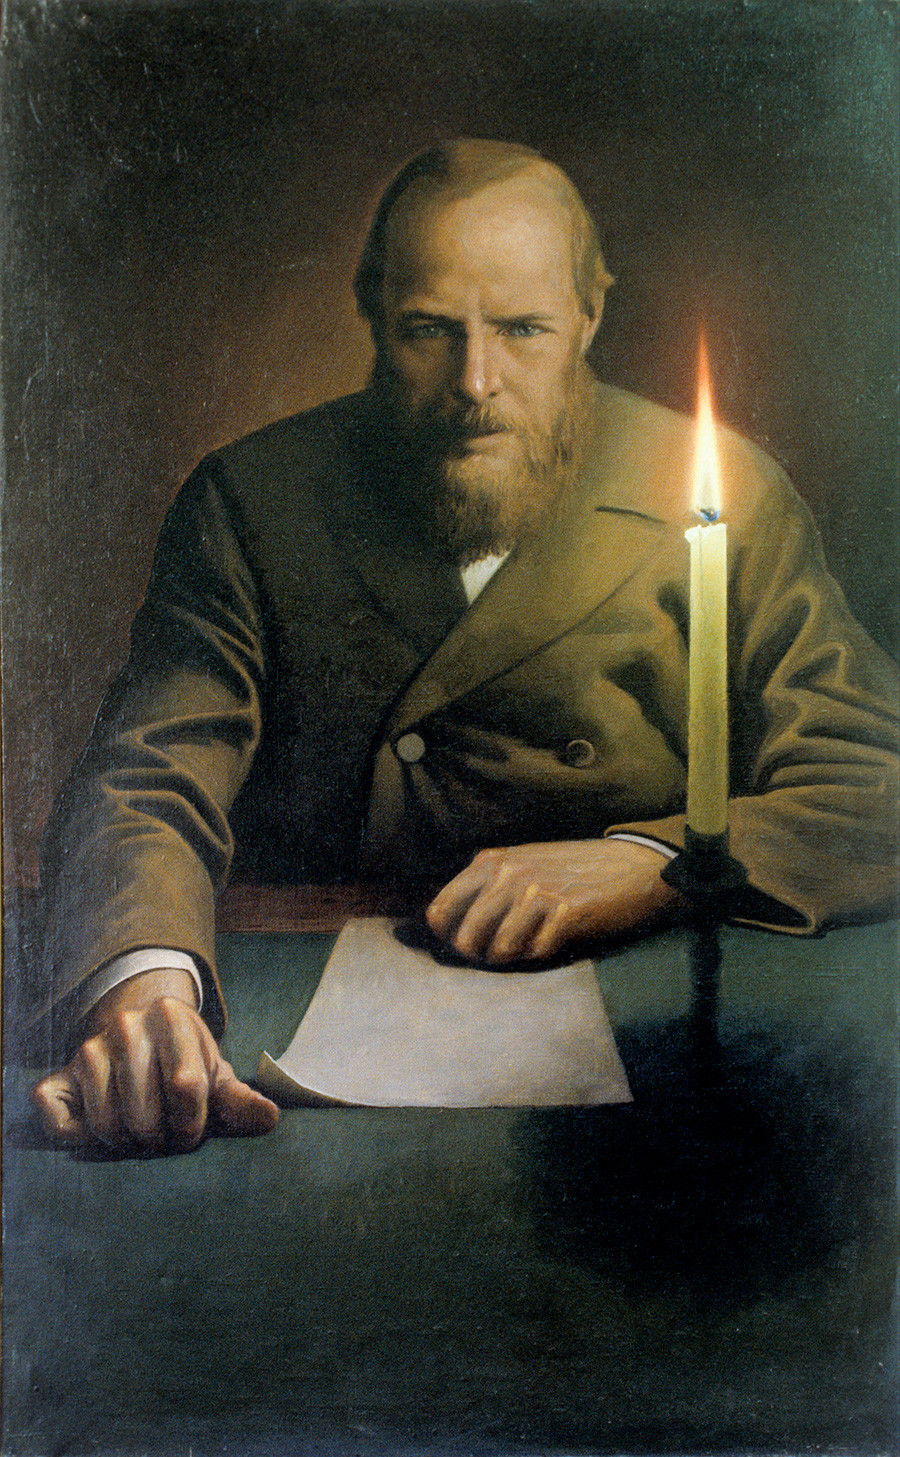 Portrait de Dostoïevski par Konstantin Vassiliev, 1974